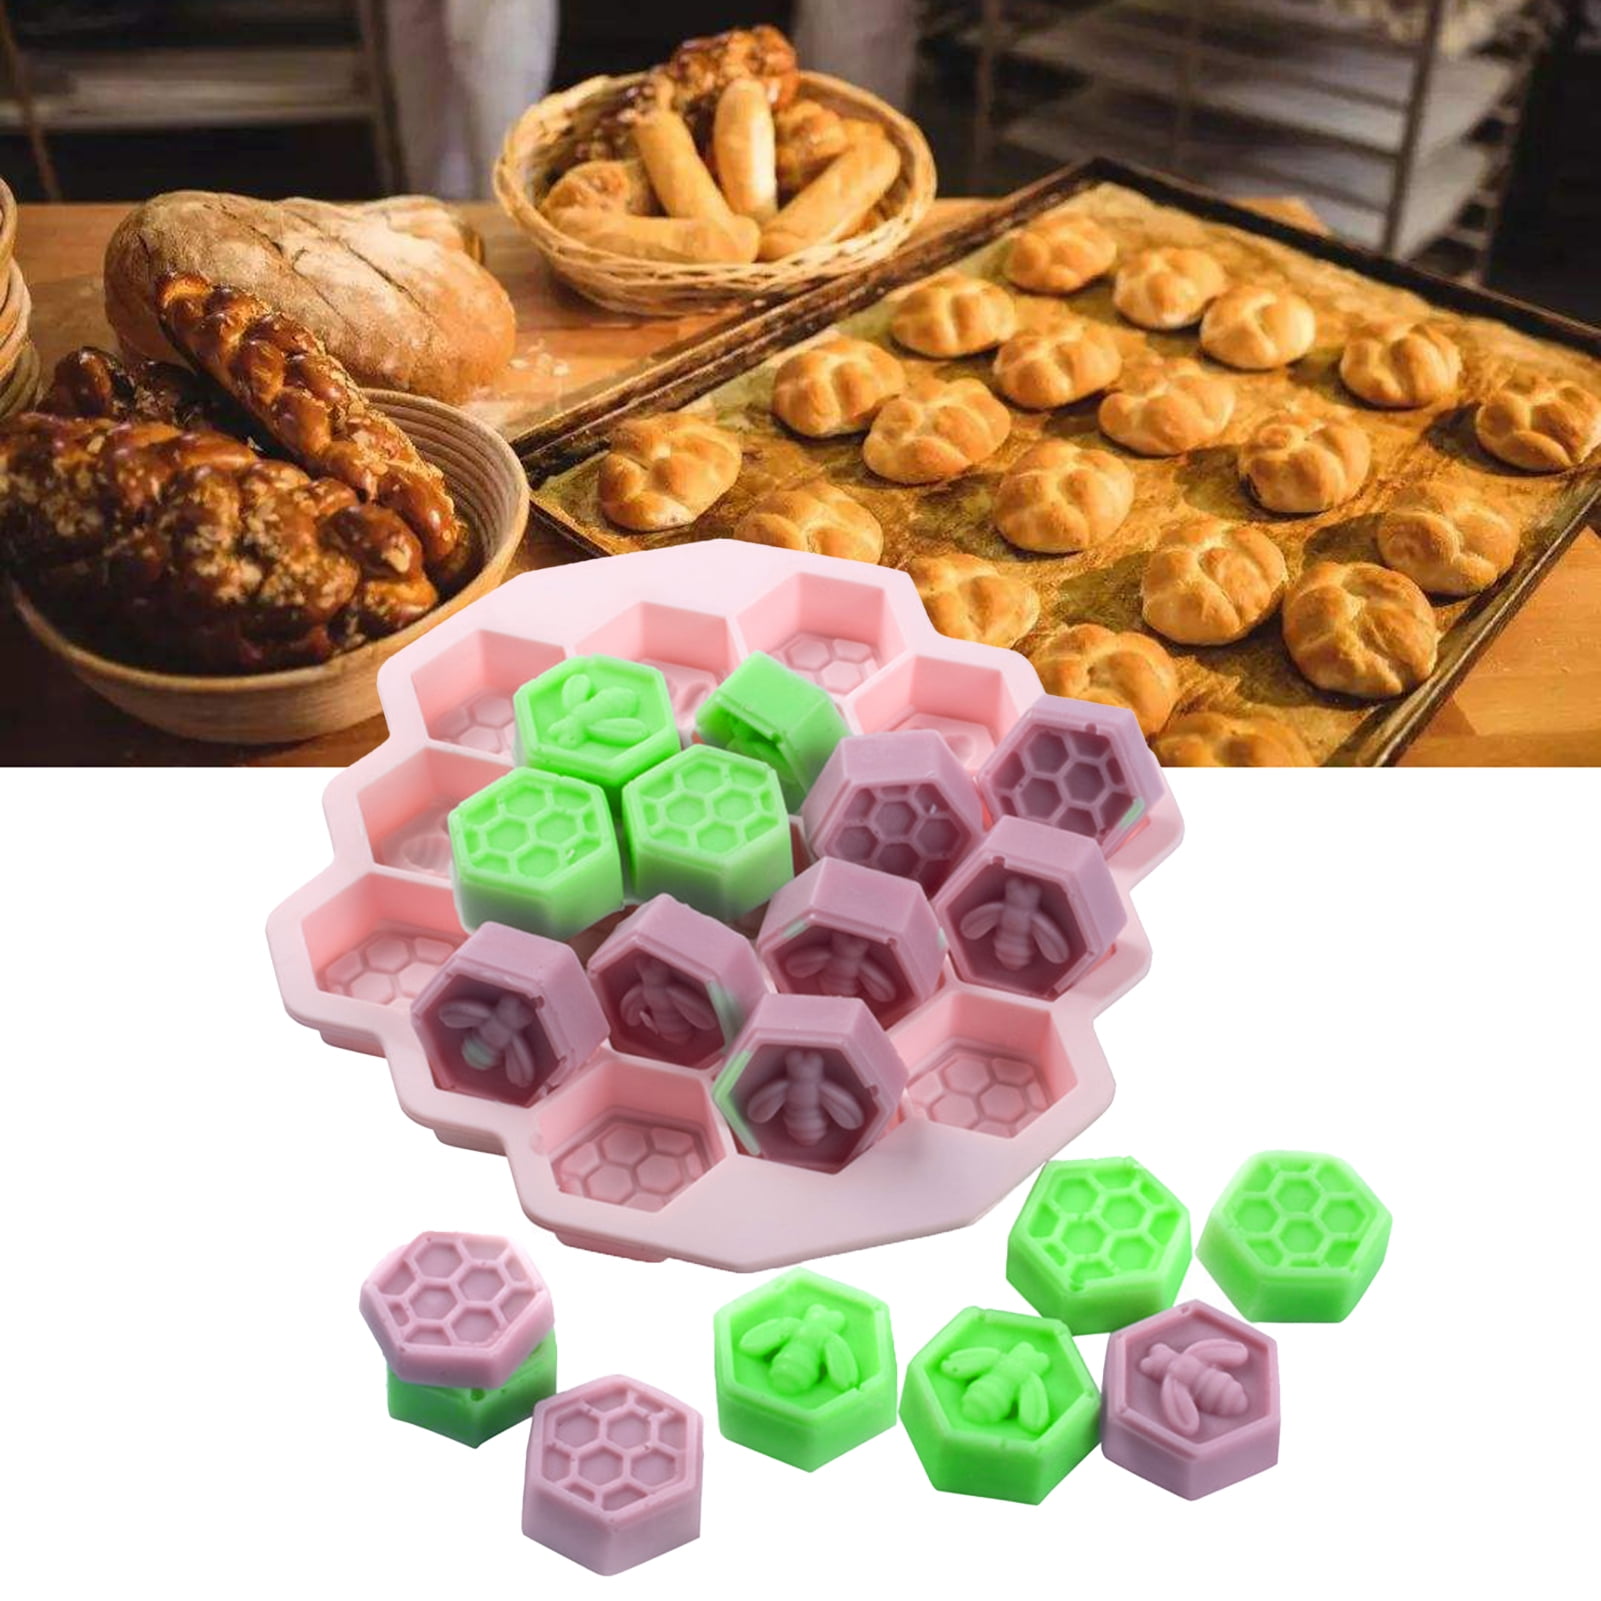 Silikomart SF023, 6-Cup 3.38 oz Flexible Silicone Muffin Baking Mold